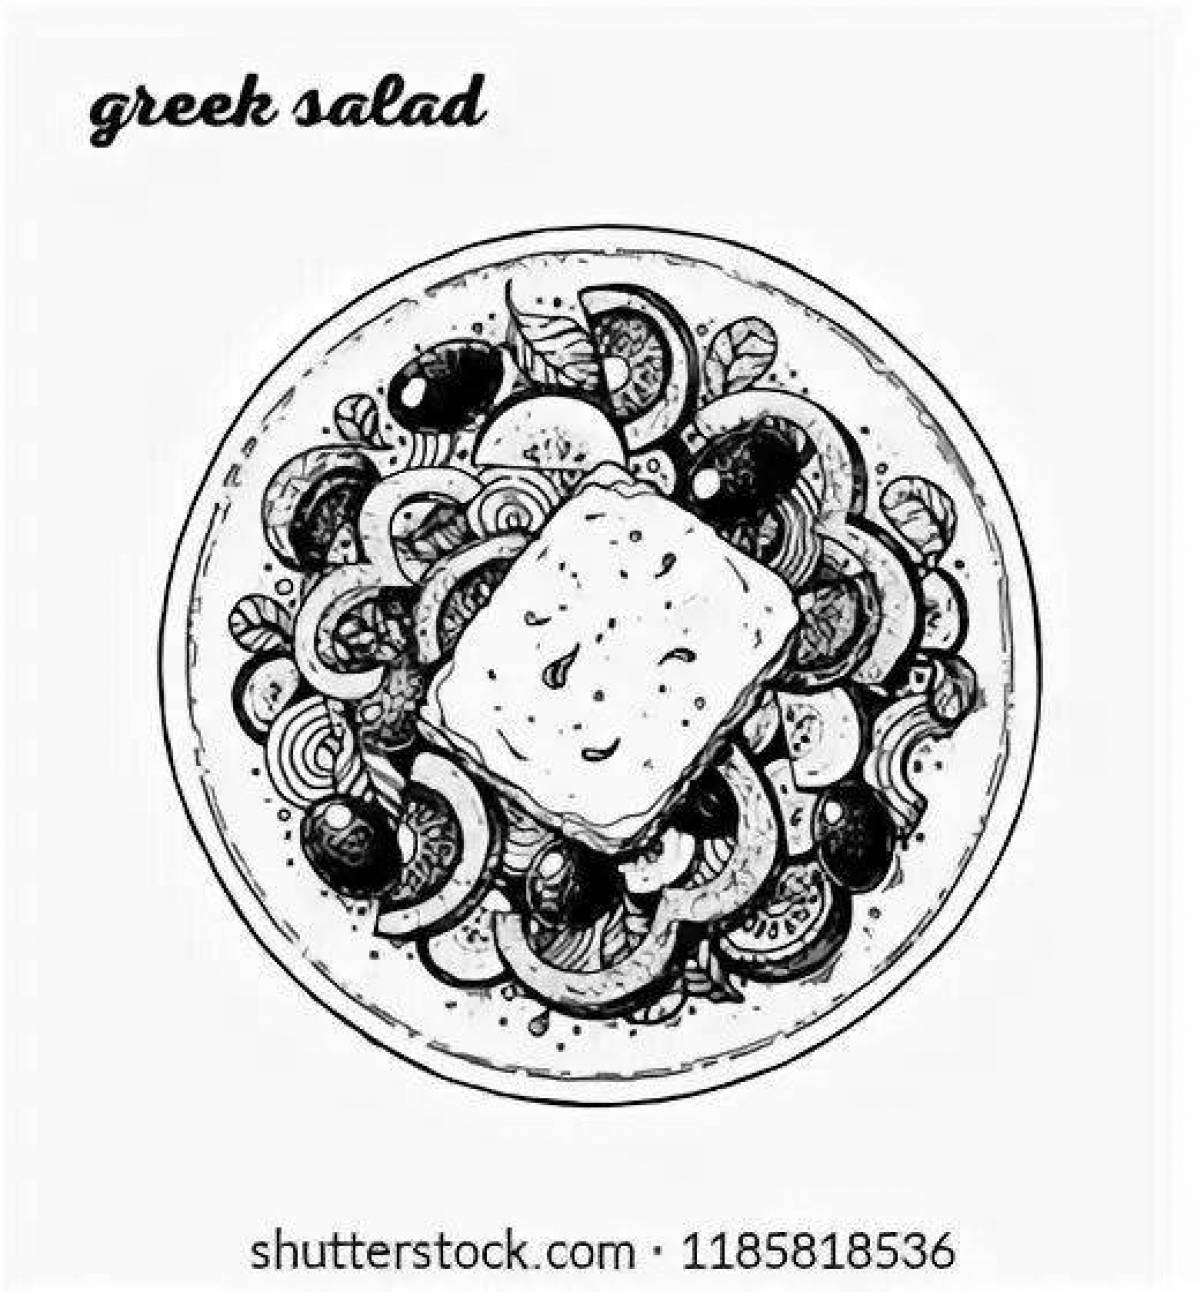 Greek salad coloring page